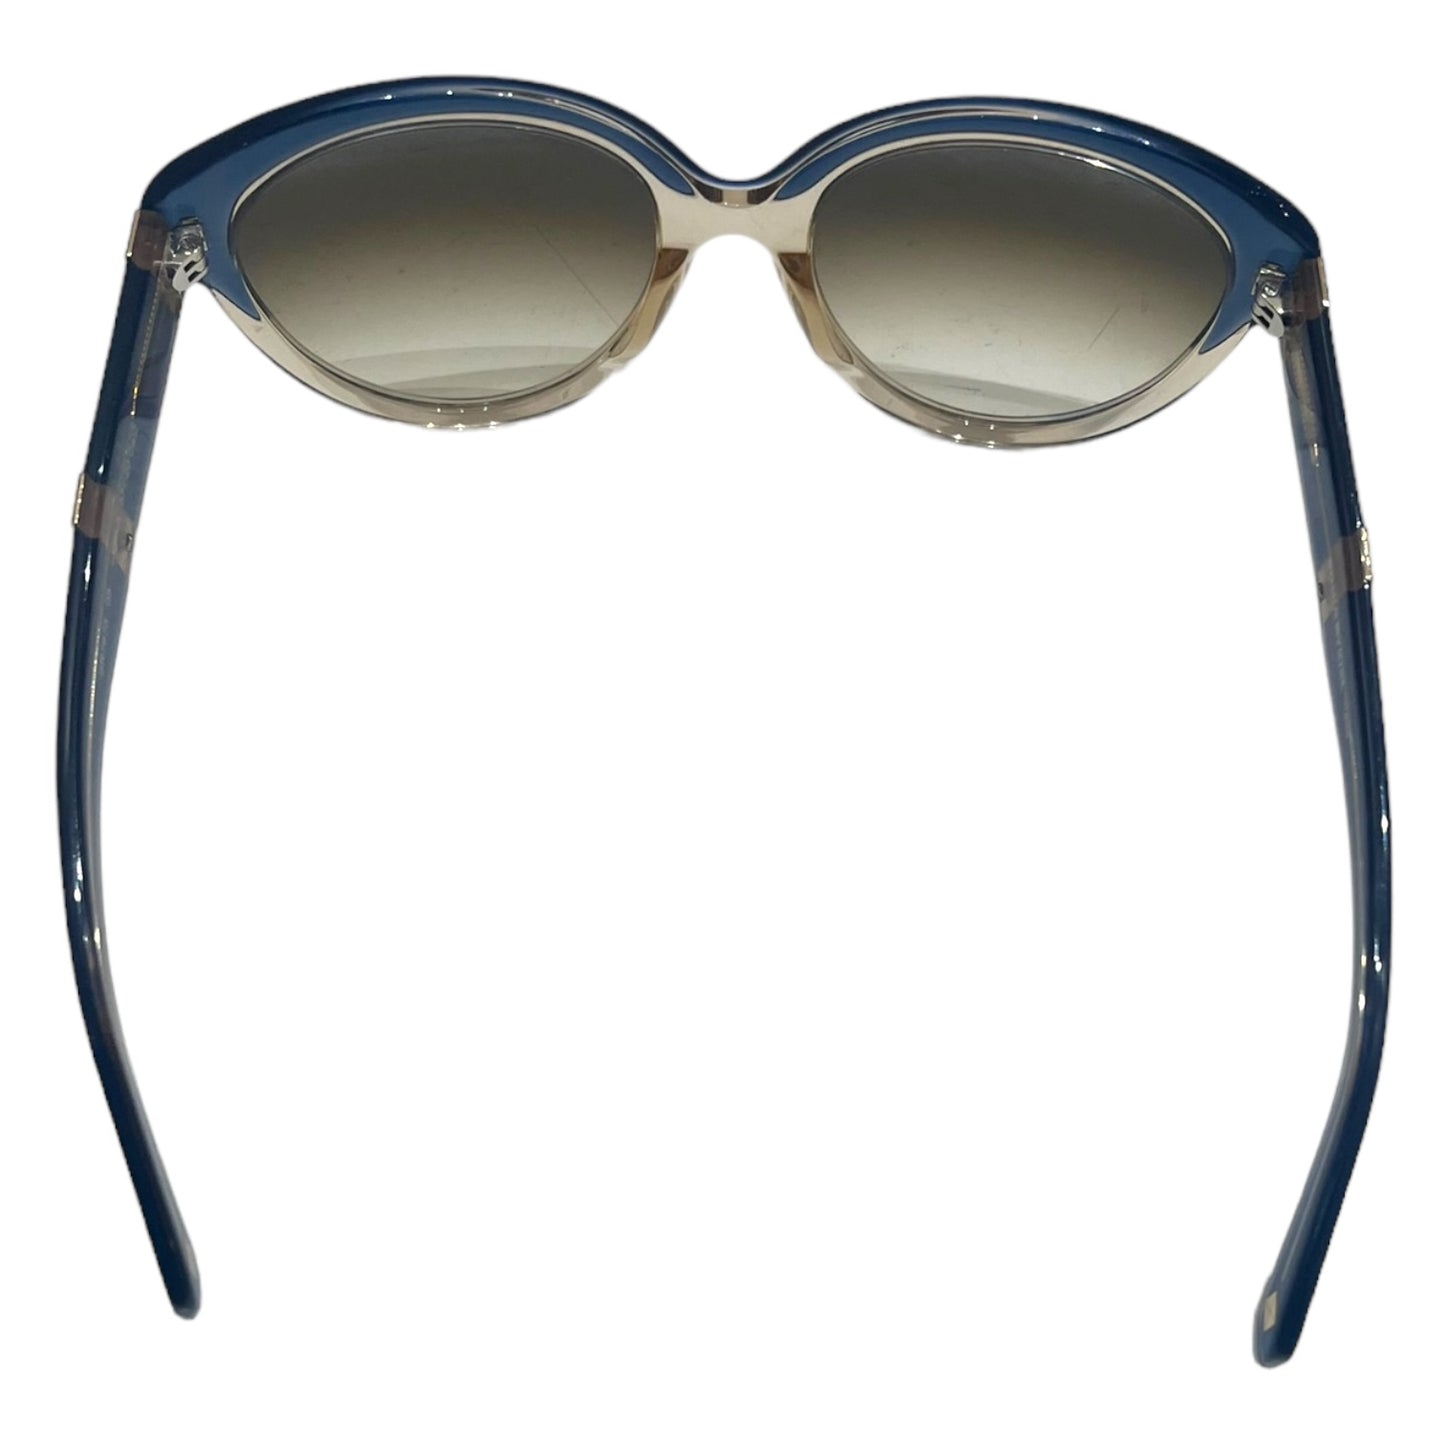 Sonia Rykiel Blue and Gold Sunglasses